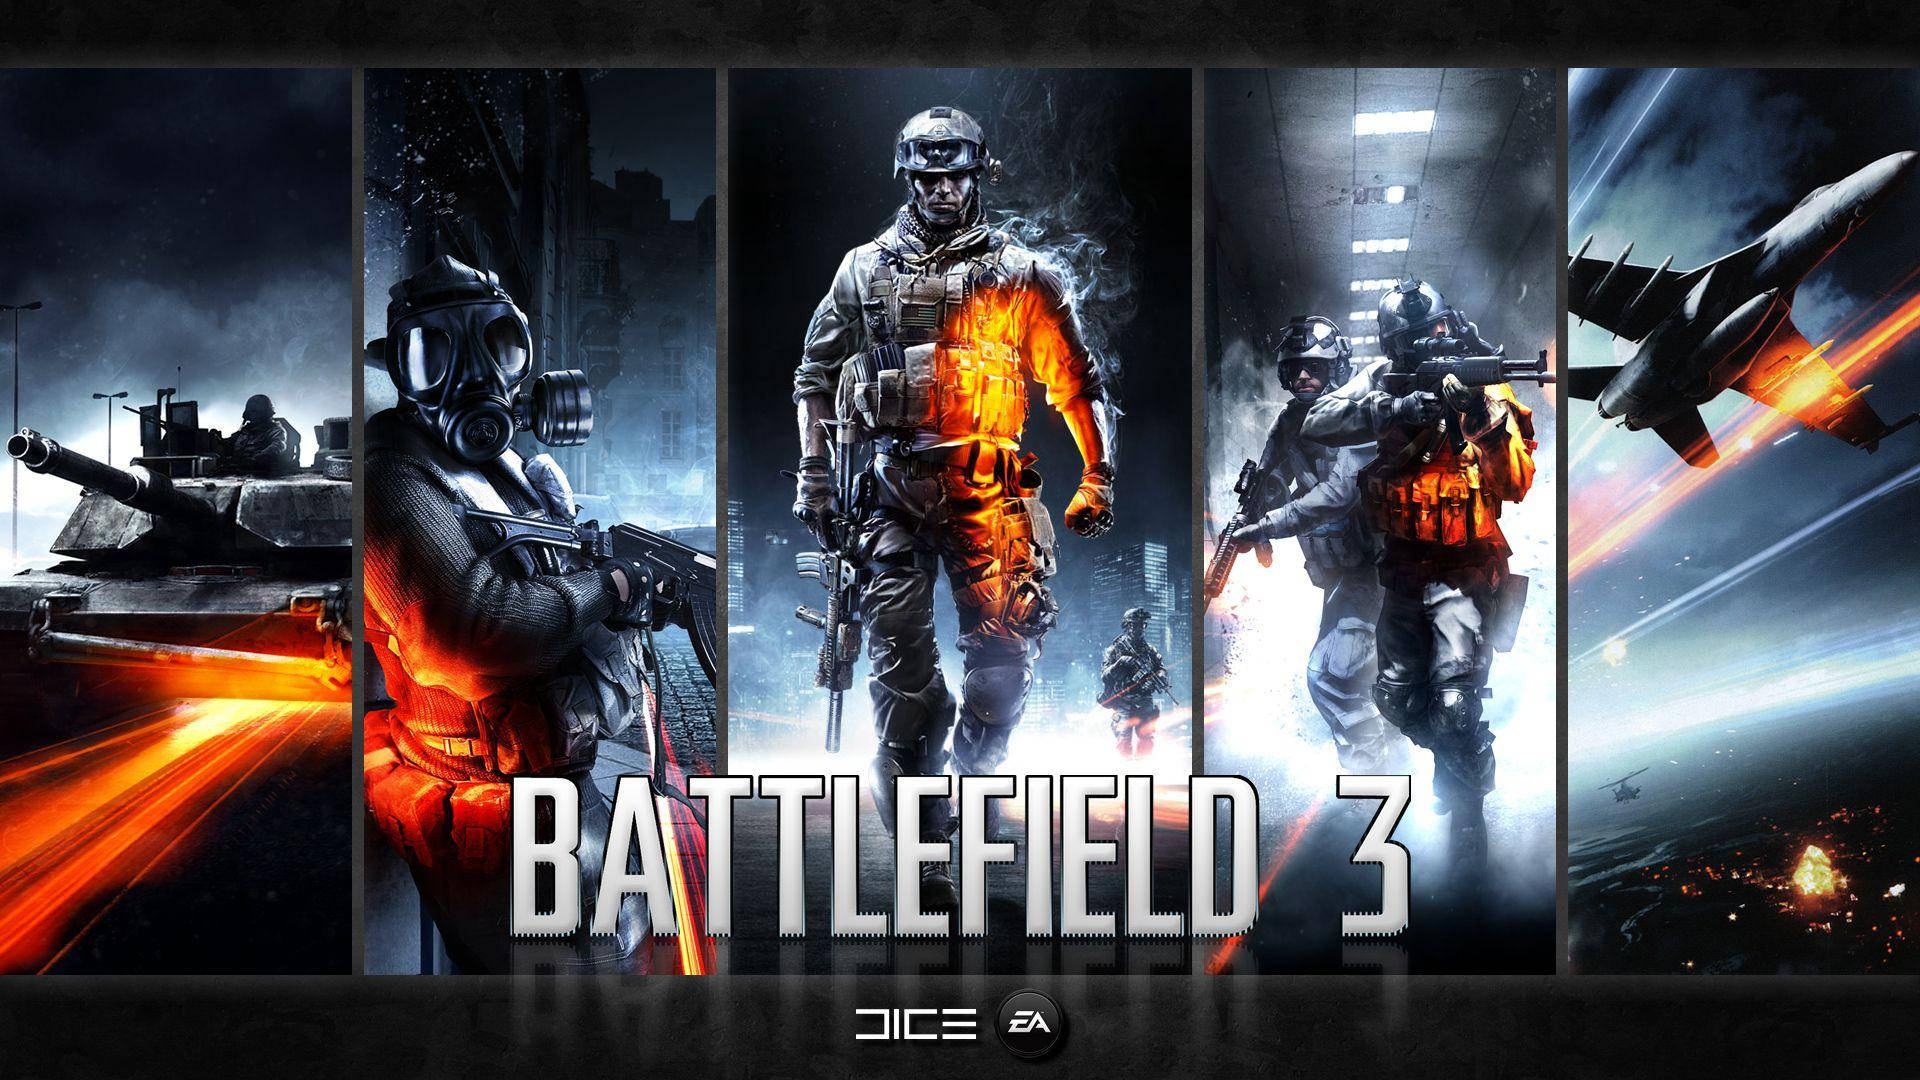 Gaming Poster Battlefield 3